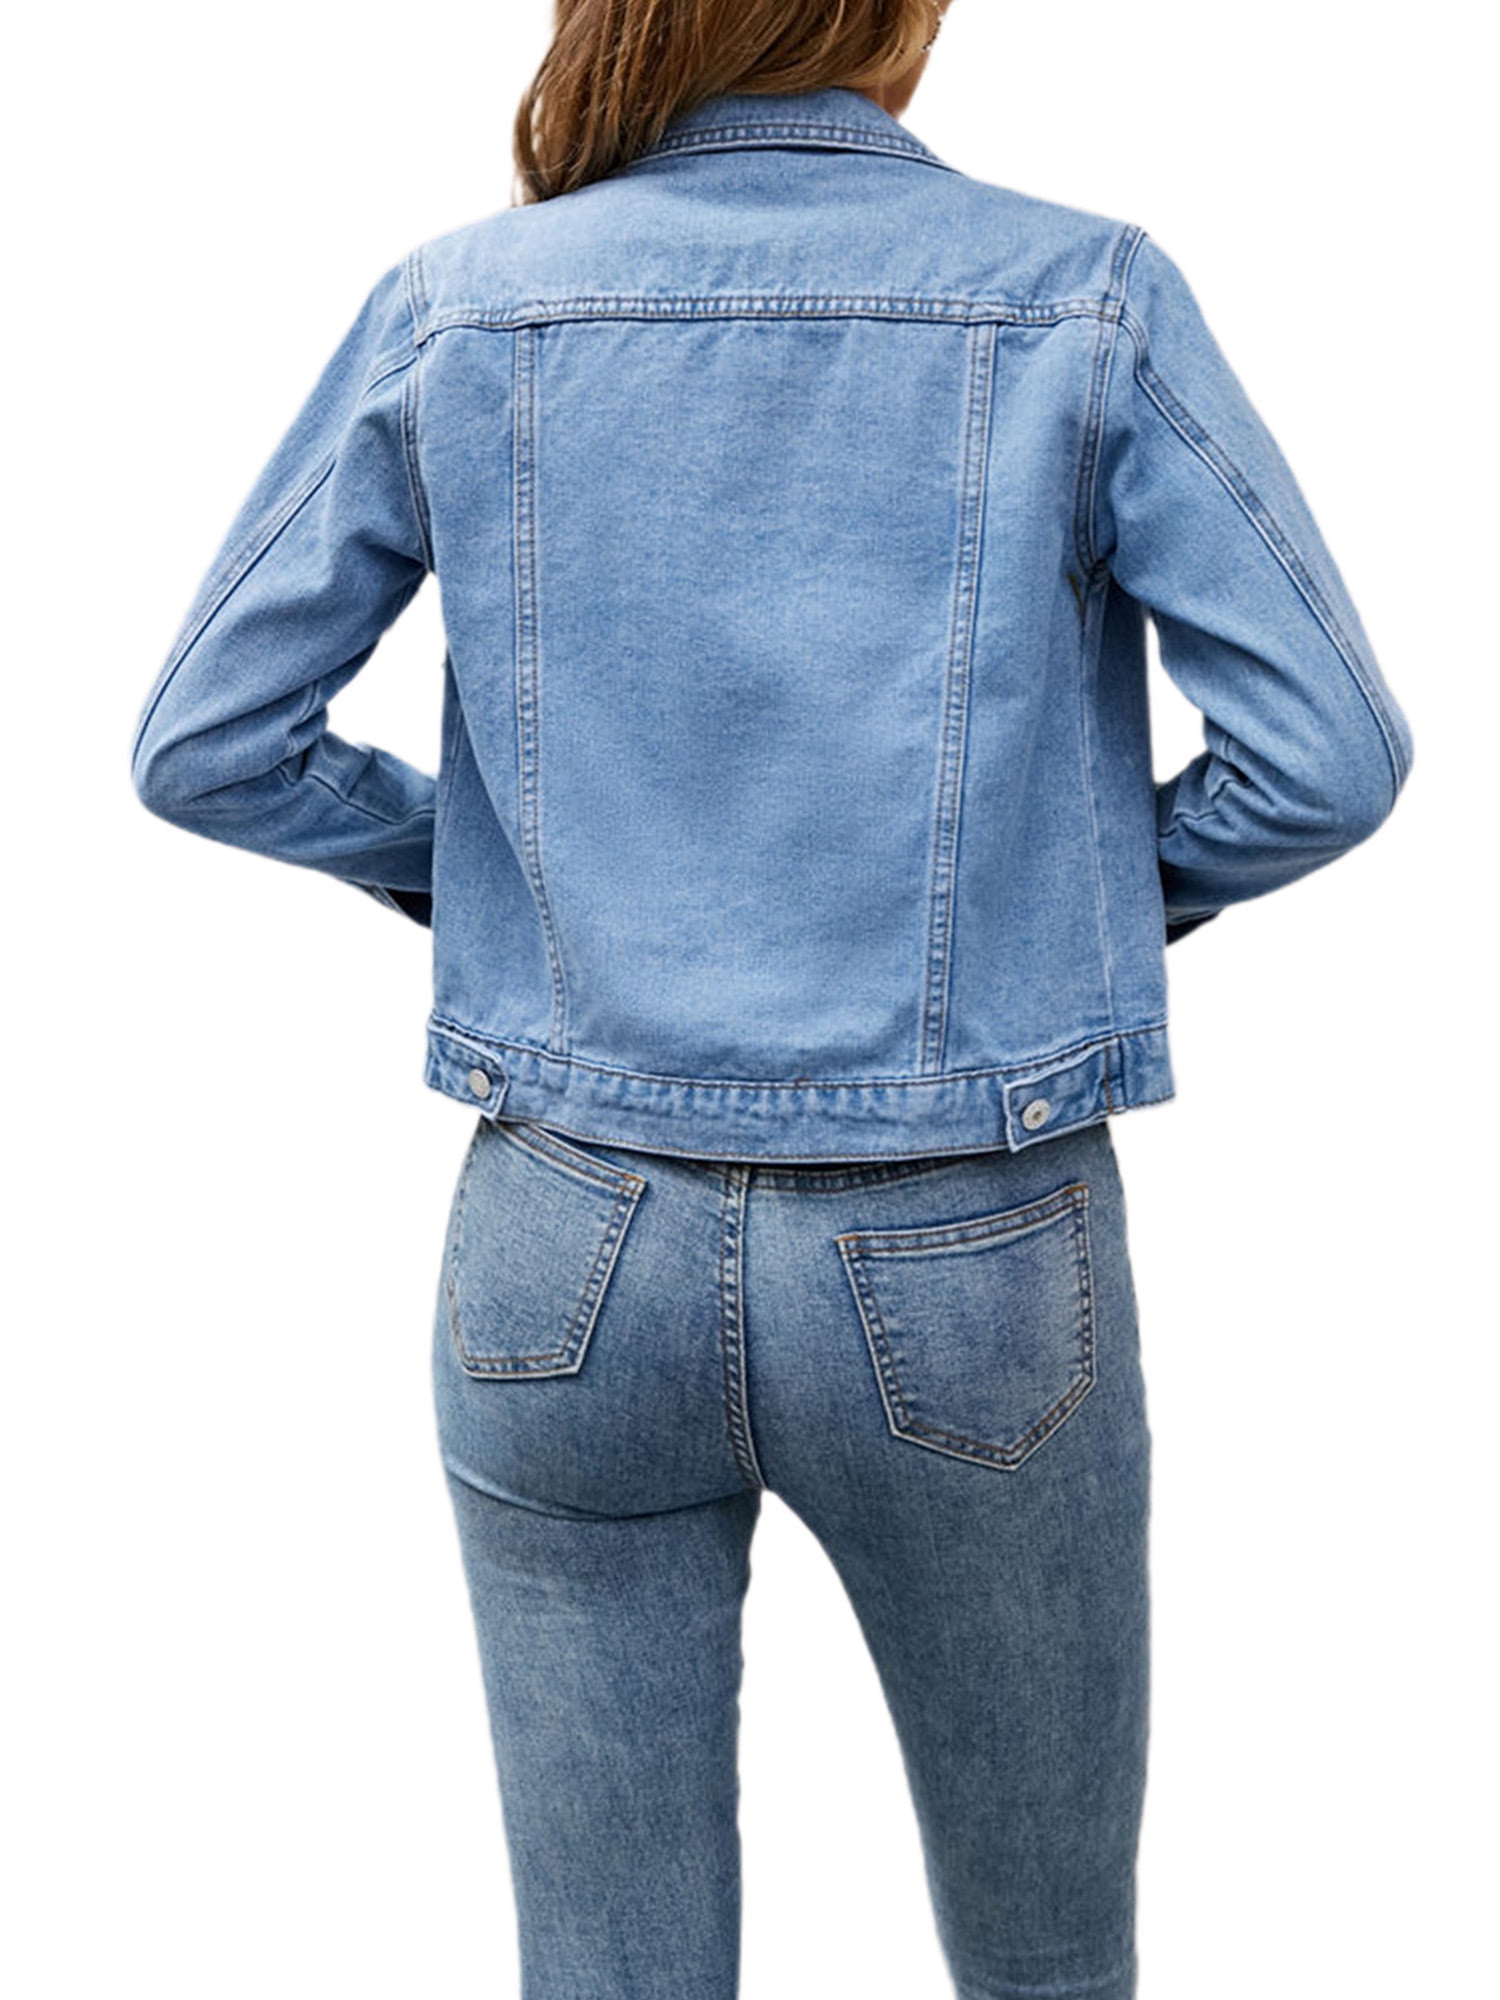 Mubineo Women's Denim Jacket, Casual Long Sleeve Button Down Chest Pocket Jean Jacket, Size: Small, Black